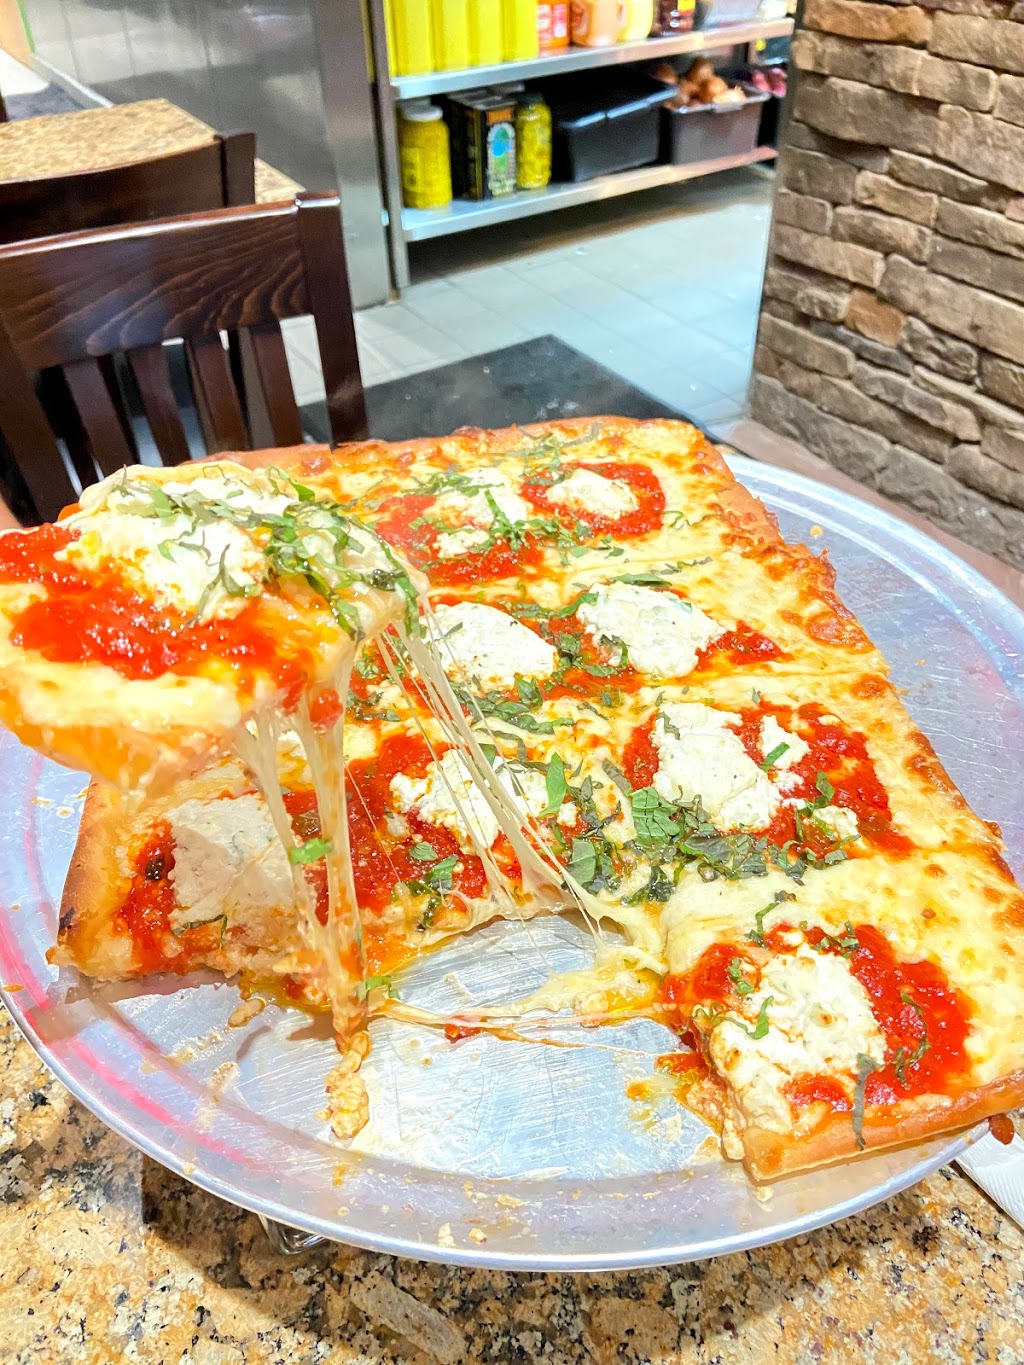 Joeys New York Pizza & Italian Restaurant | 1312 Seven Springs Blvd, New Port Richey, FL 34655, USA | Phone: (727) 807-6001